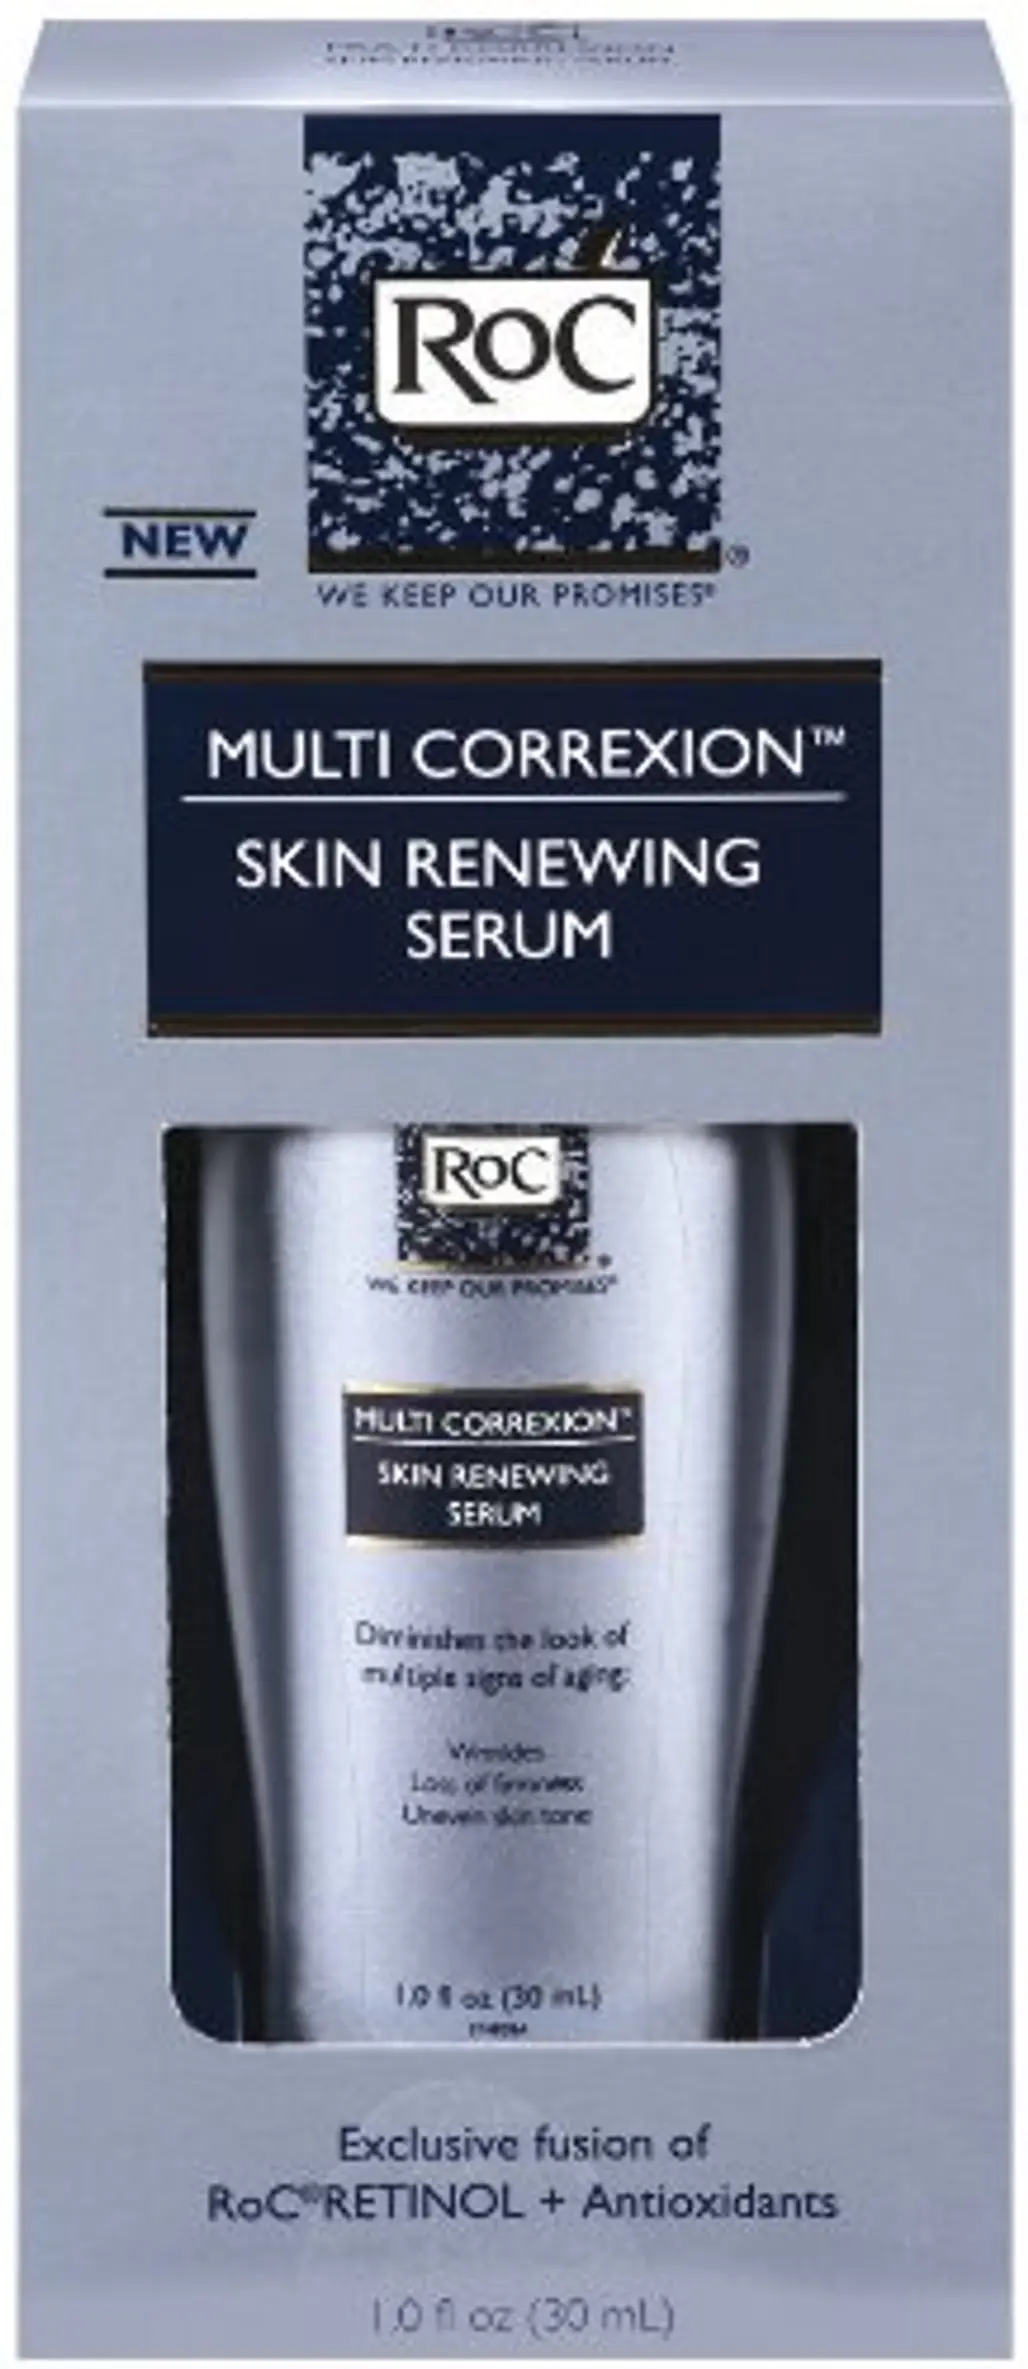 ROC Multi-Correxion Skin Renewing Serum